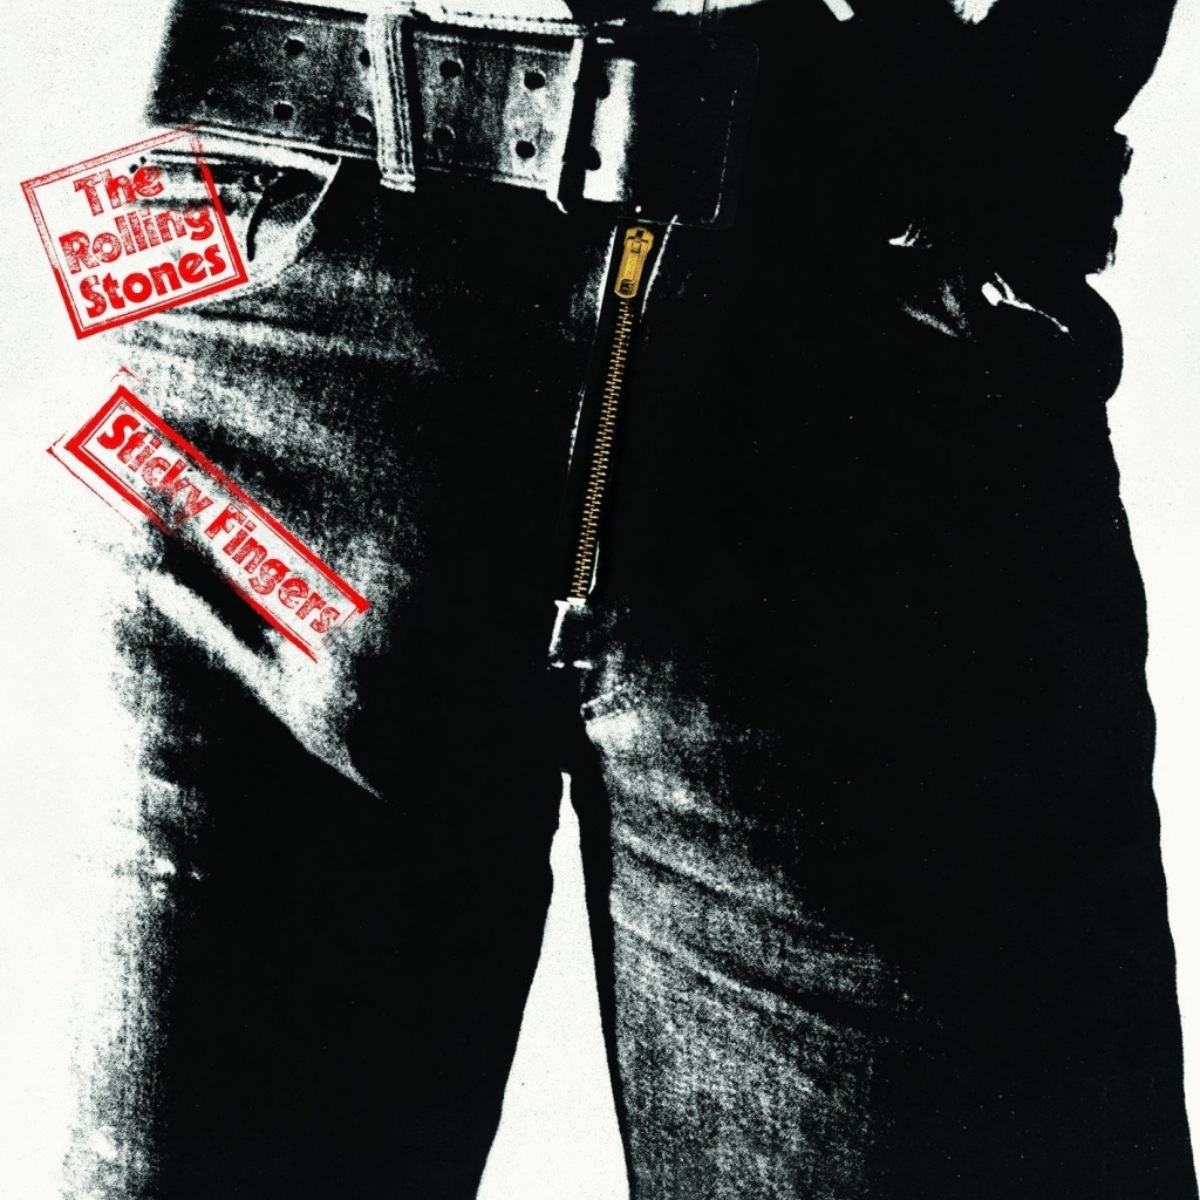 Capa do álbum dos Rolling Stones Sticky Fingers